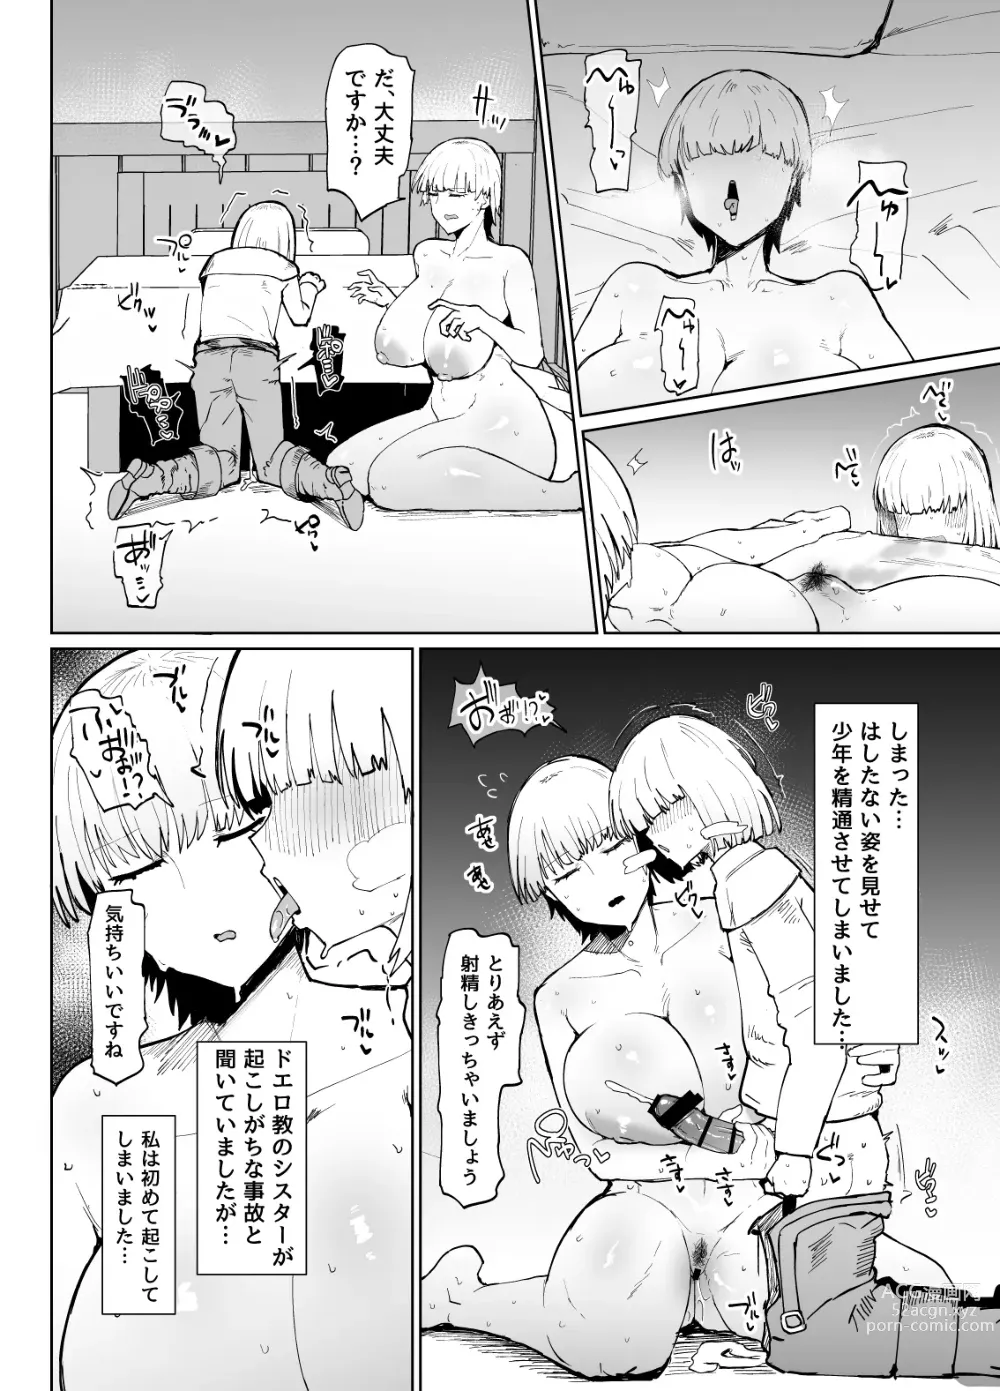 Page 27 of doujinshi 糸目でデカケツで絶対に孕まないオナホシスター